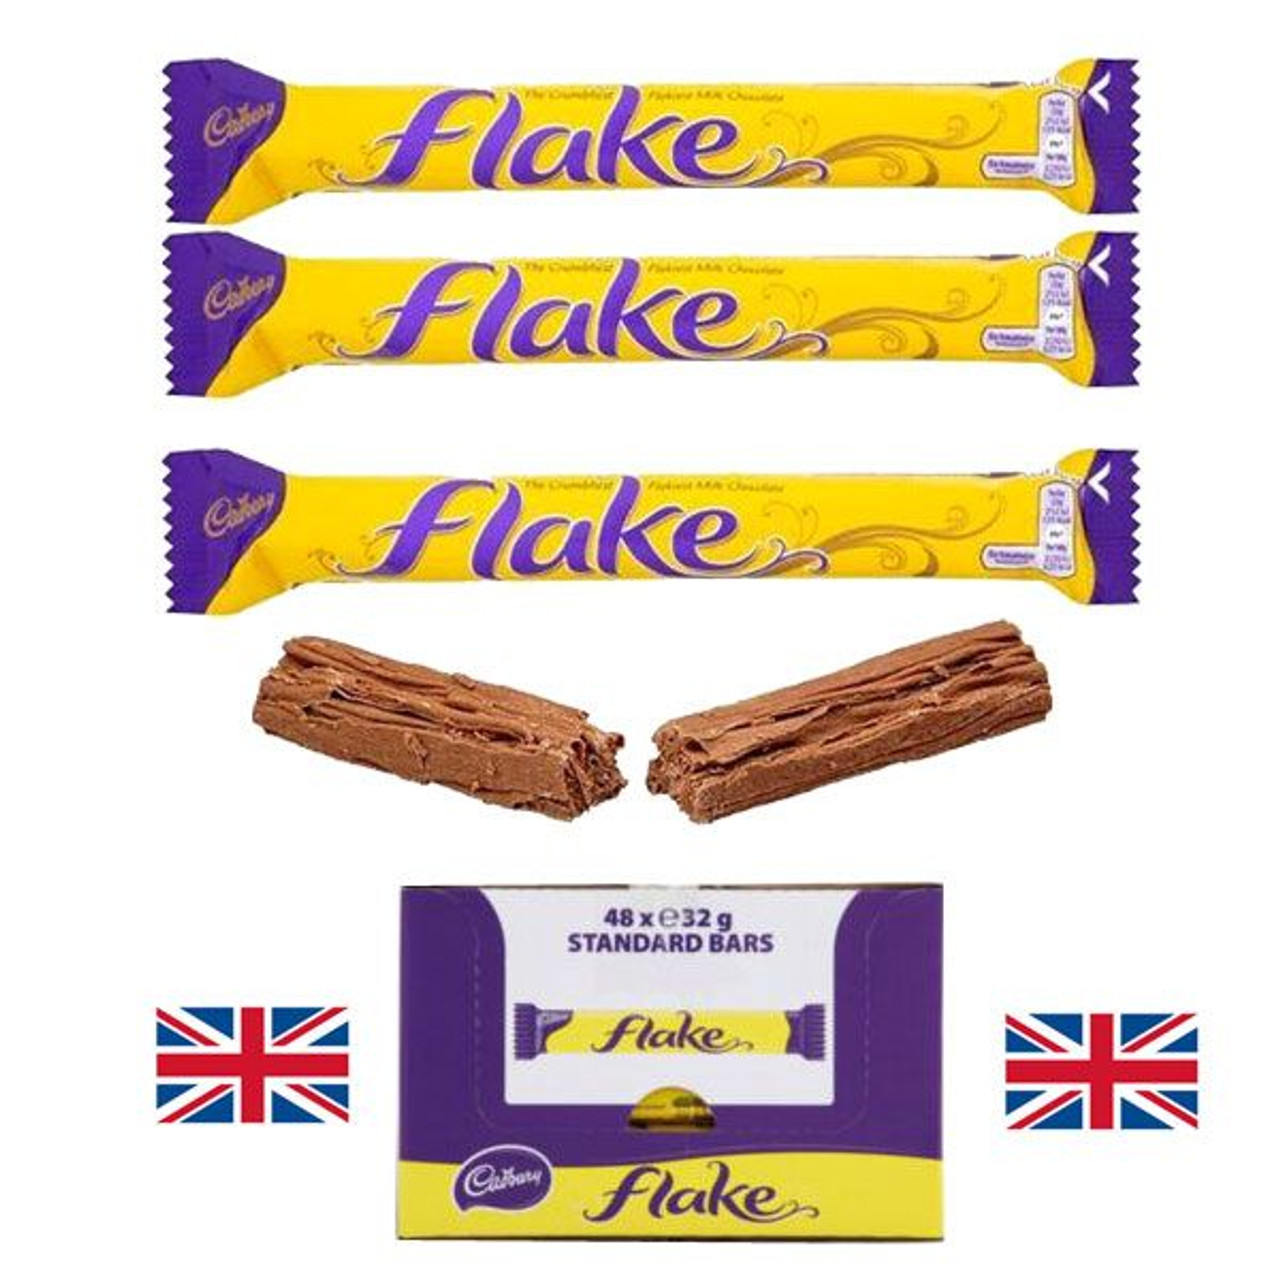 Flake (chocolate bar) - Wikipedia